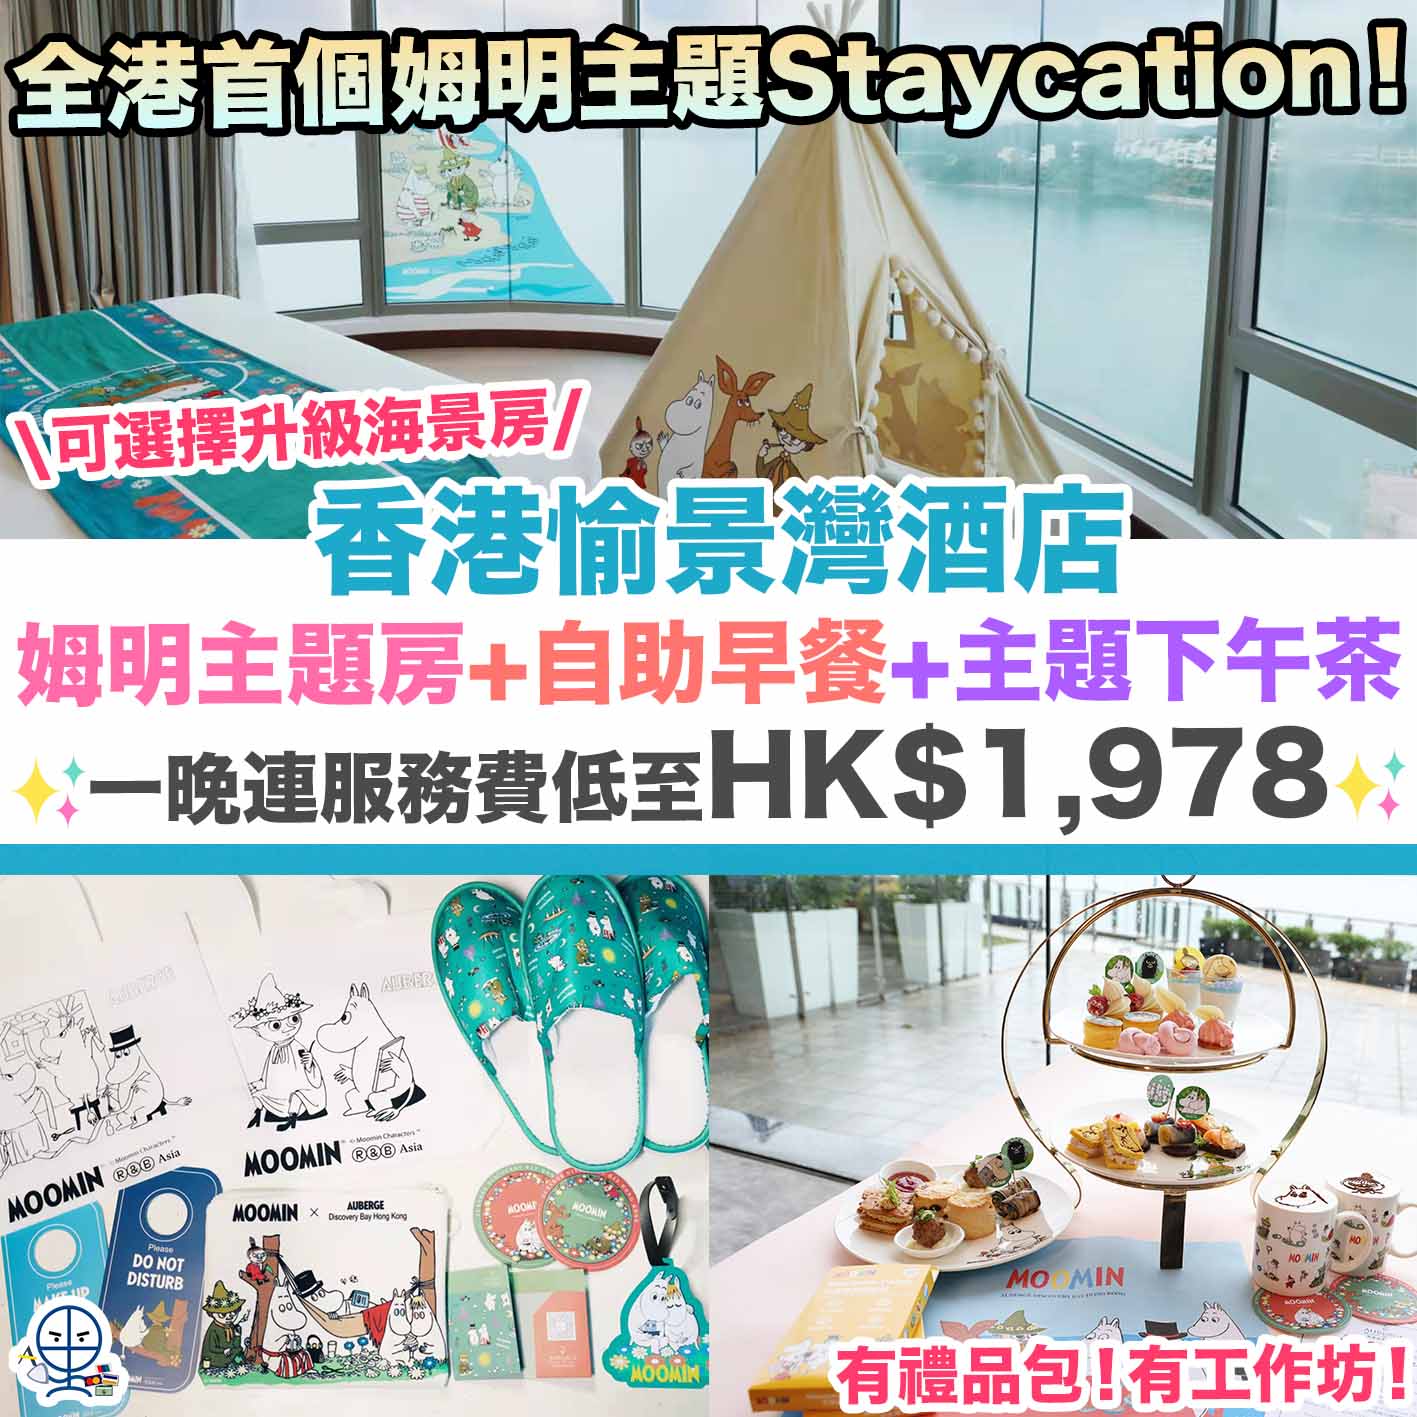 香港愉景灣酒店-staycation-hotel staycation-Auberge Discovery Bay Hong Kong-Auberge Discovery Bay Hong Kong staycation package